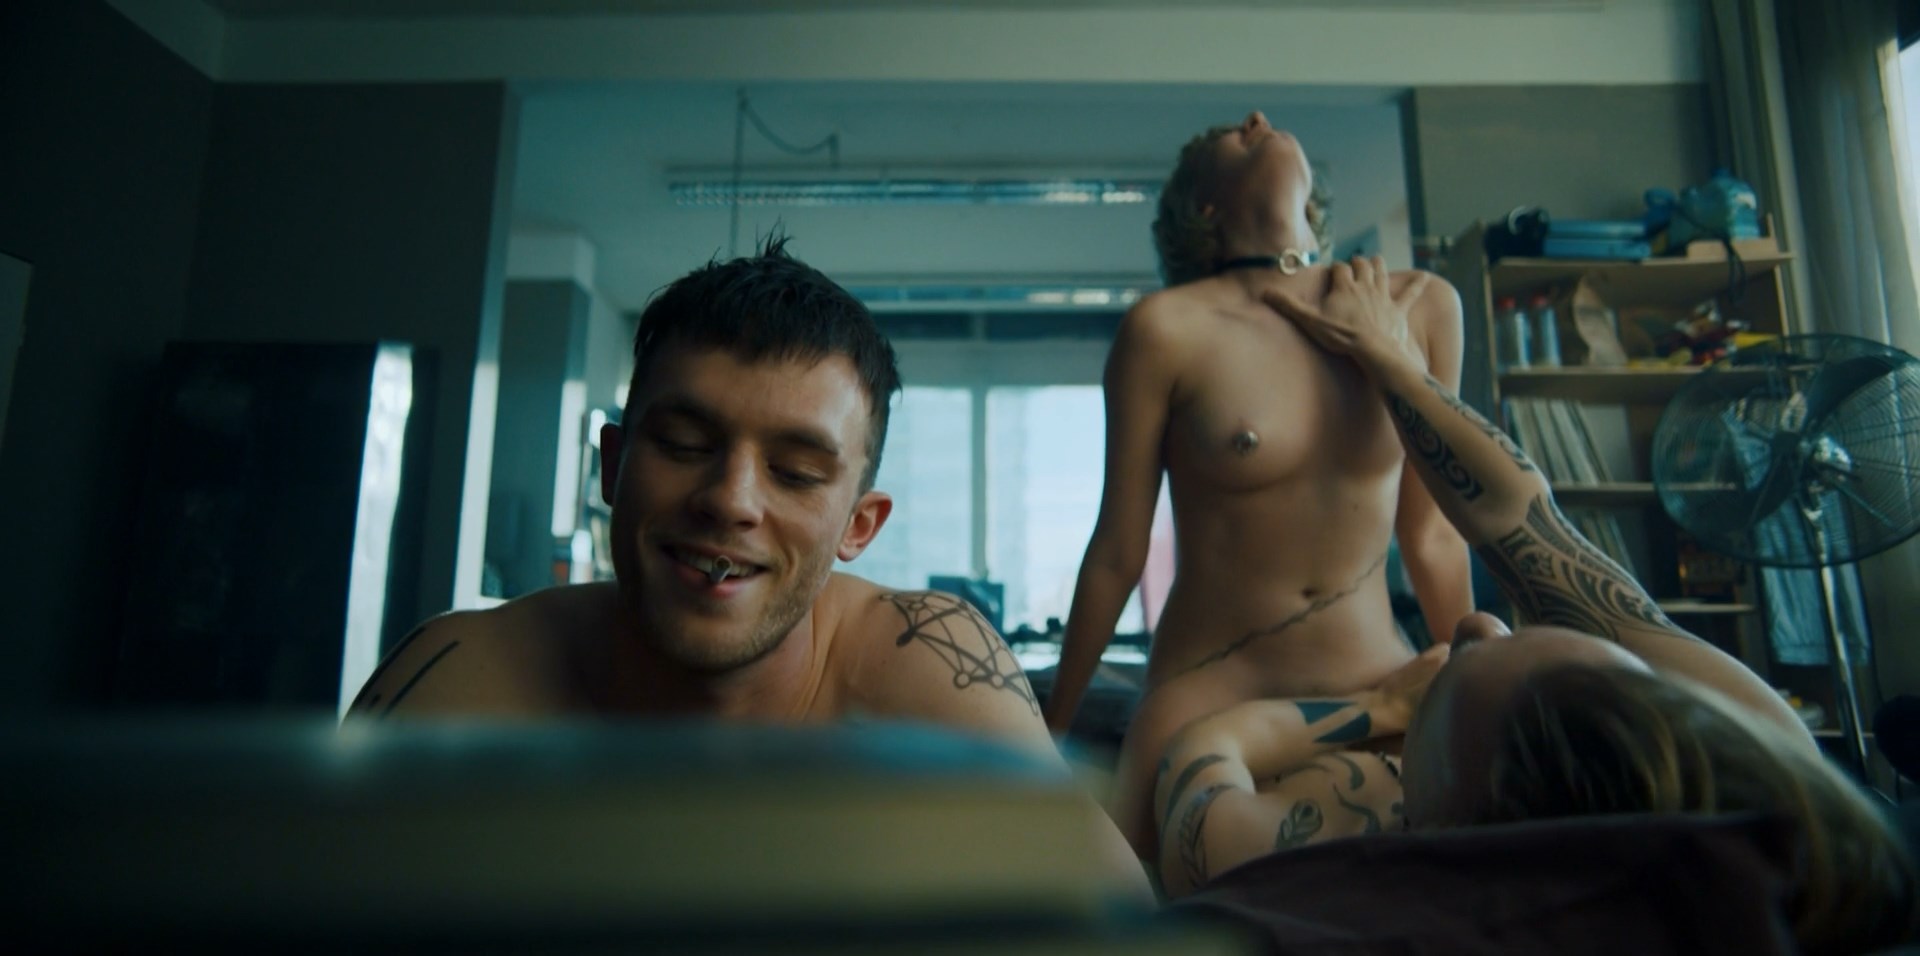 Zoe porn star movies naked nude